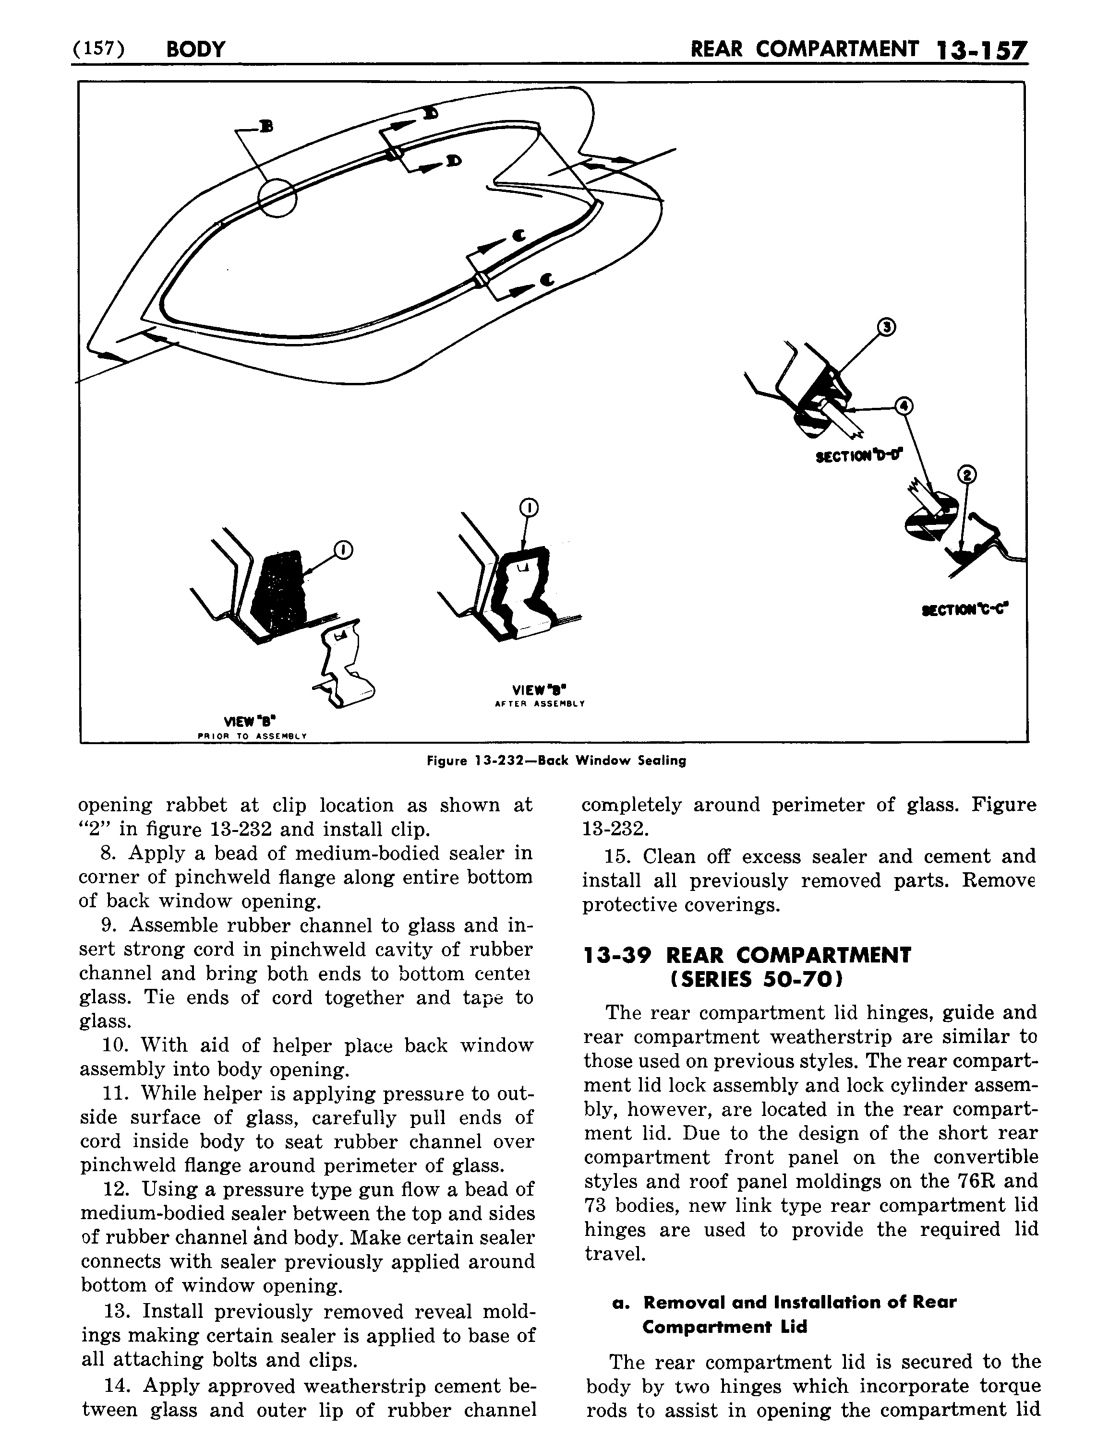 n_1957 Buick Body Service Manual-159-159.jpg